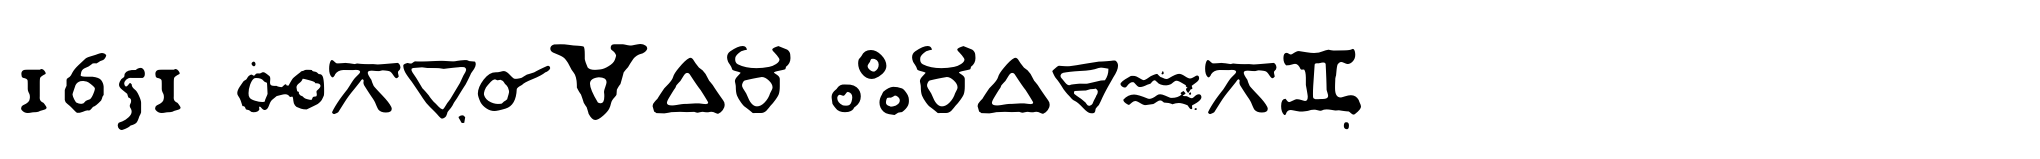 1651 Alchemy Symbols image